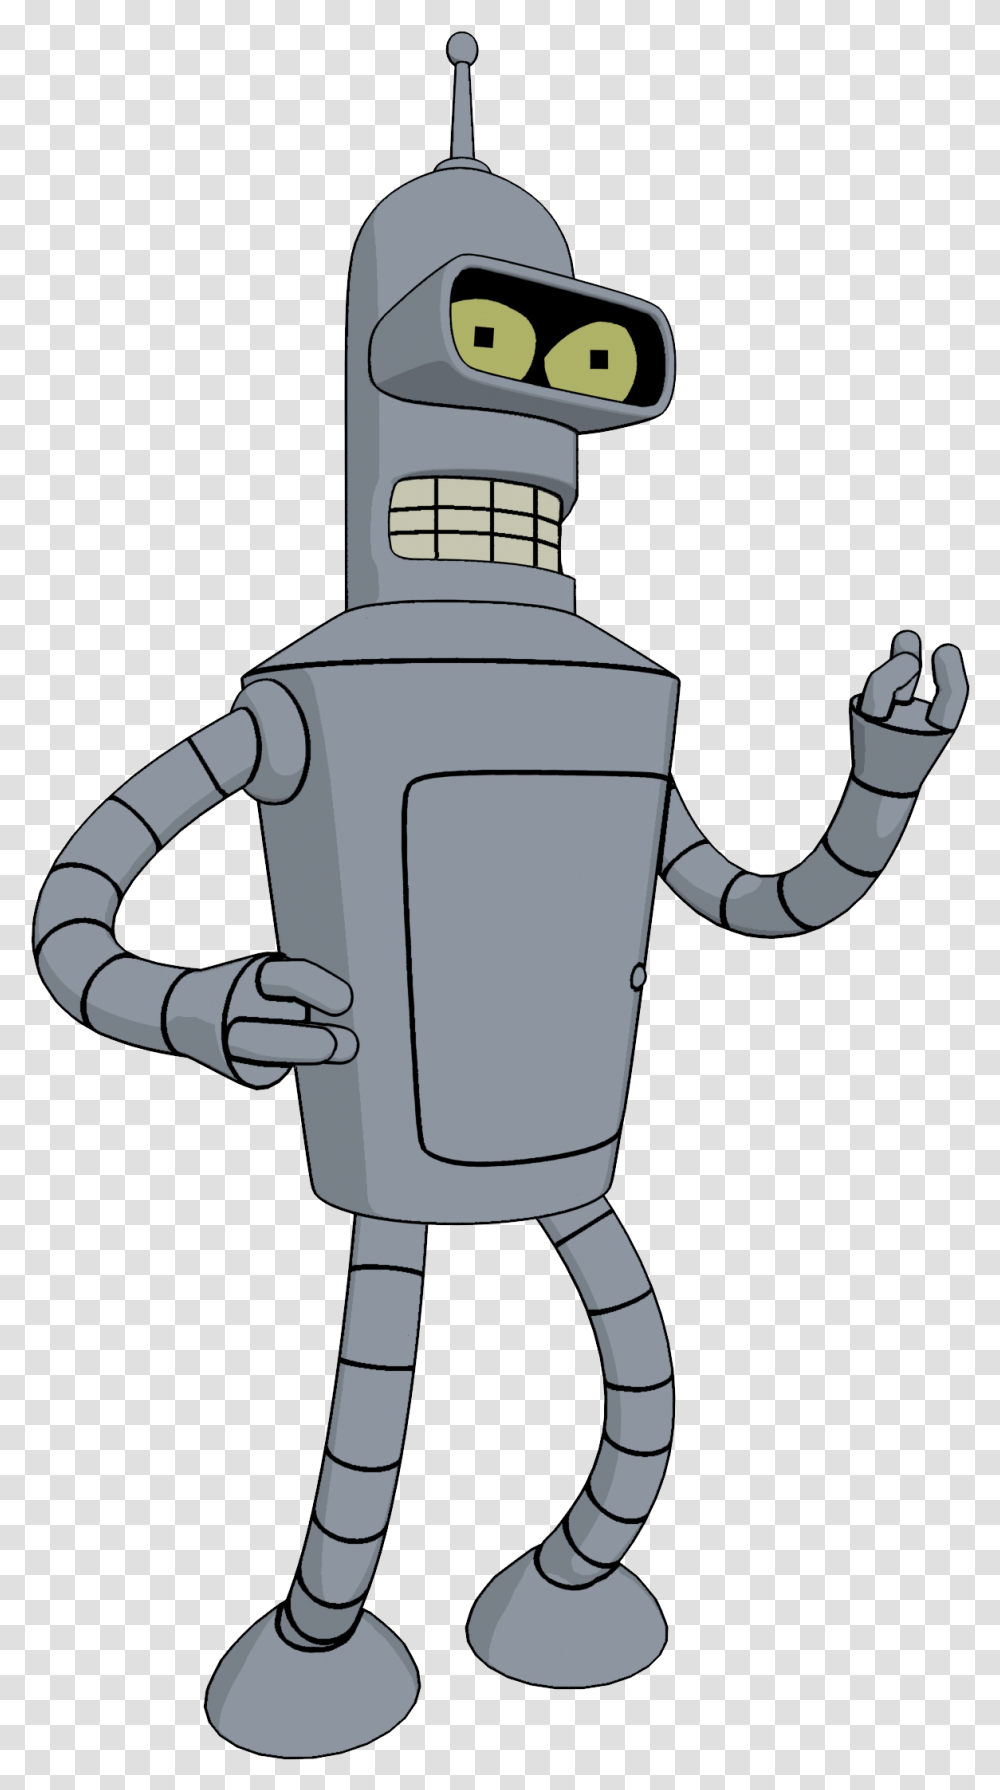 Futurama Bender Bender, Robot, Astronaut, Fire Hydrant Transparent Png